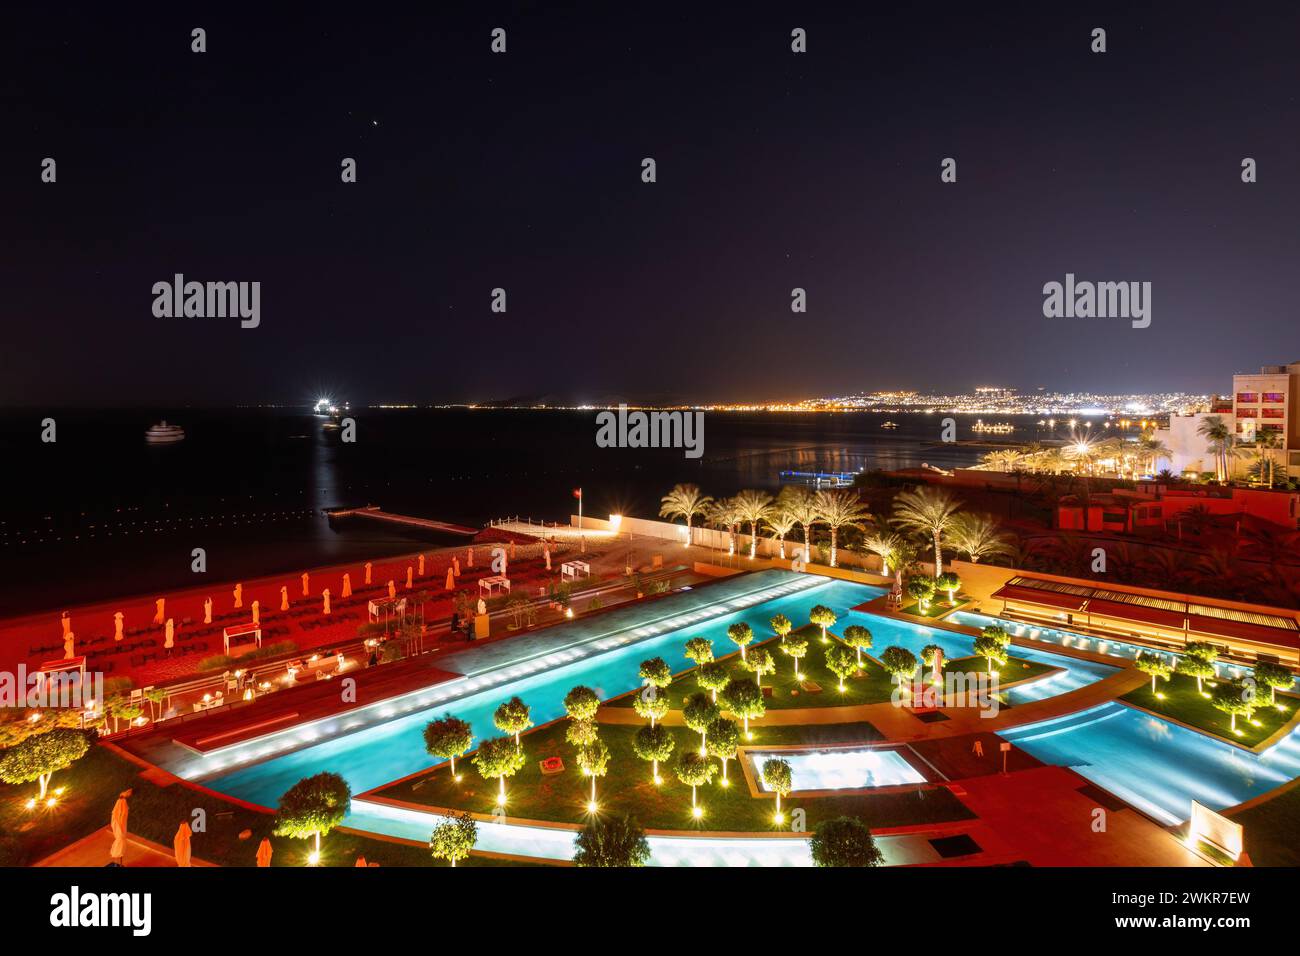 Scenic view of illuminated swimming pool and beach at Gulf of Aqaba in Aqaba, Jordan at night Stock Photo